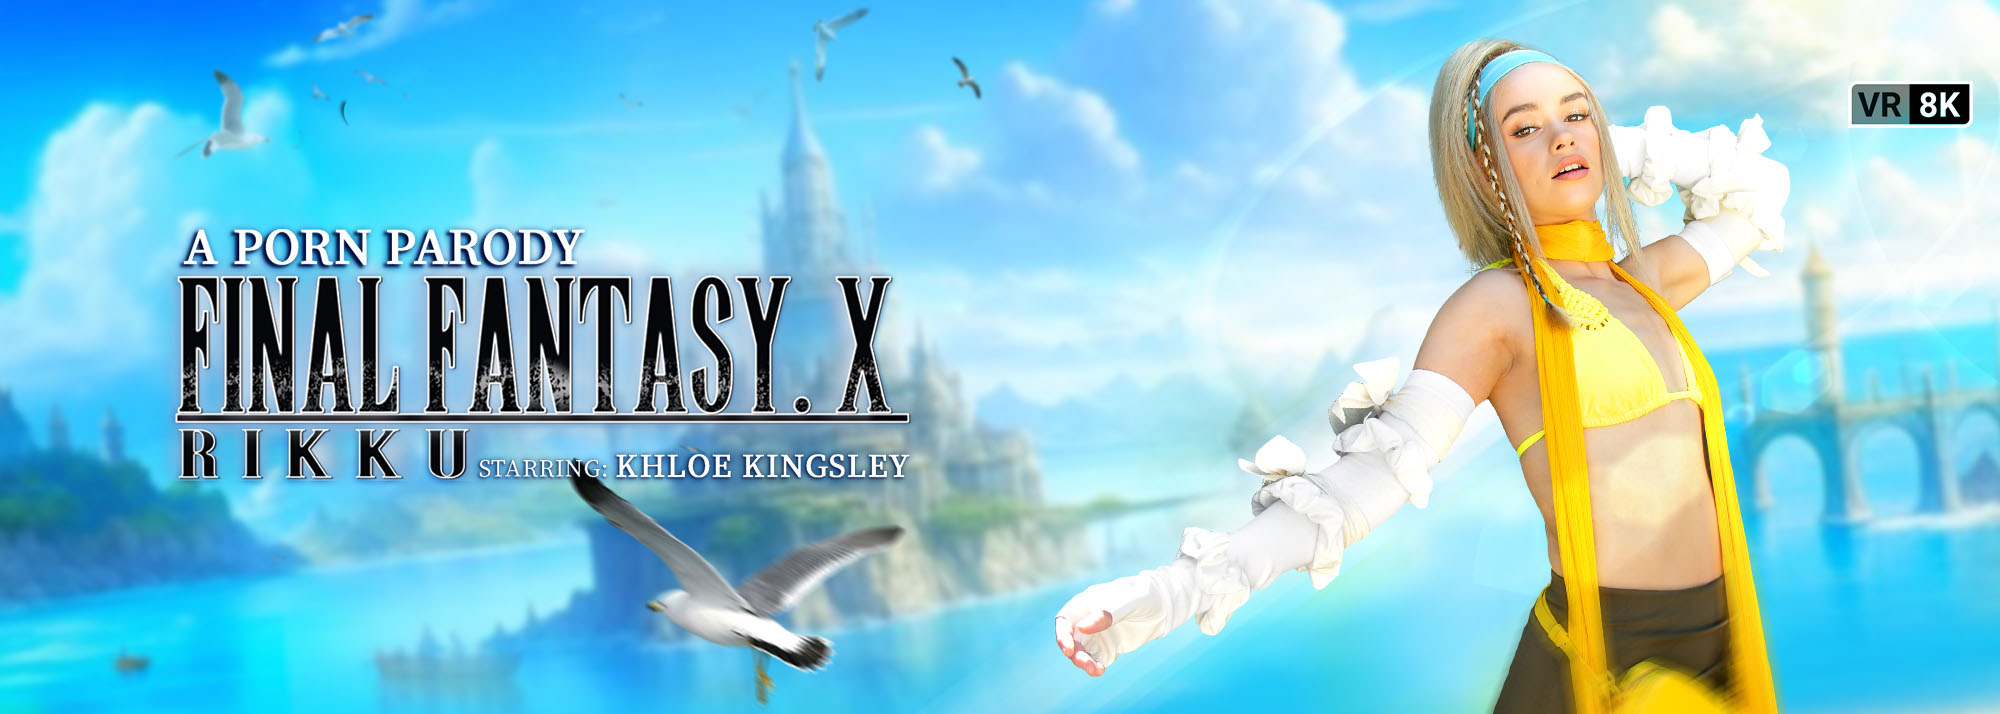 Final Fantasy X: Rikku (A Porn Parody) Slideshow